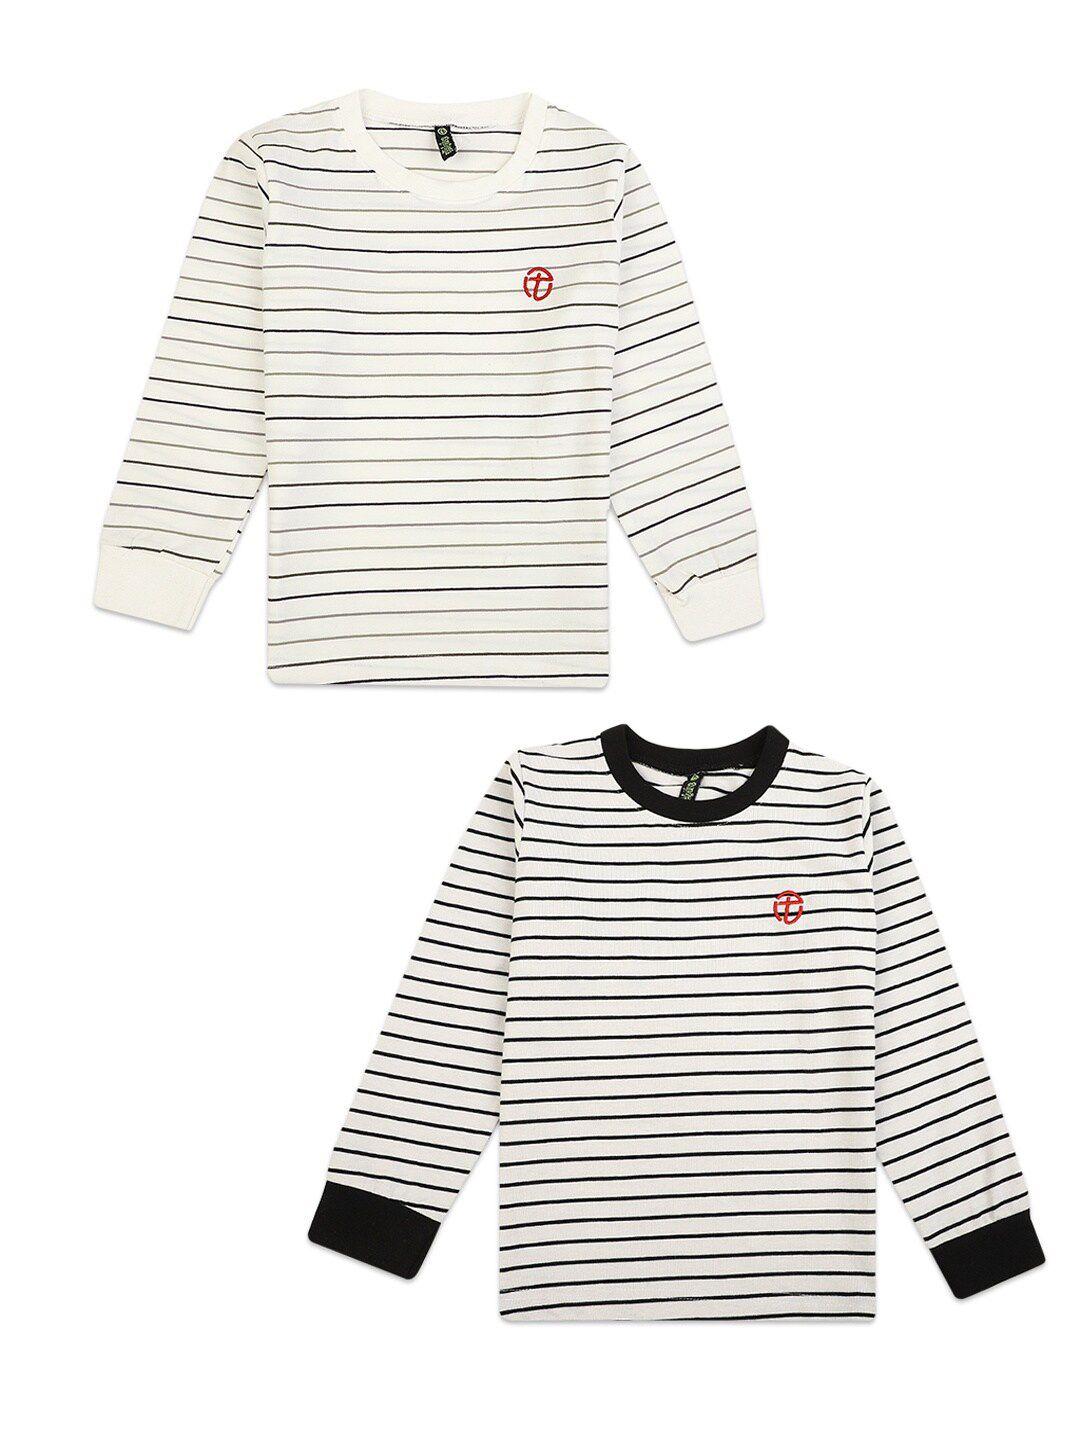 v-mart boys pack of 2 grey & black striped t-shirts